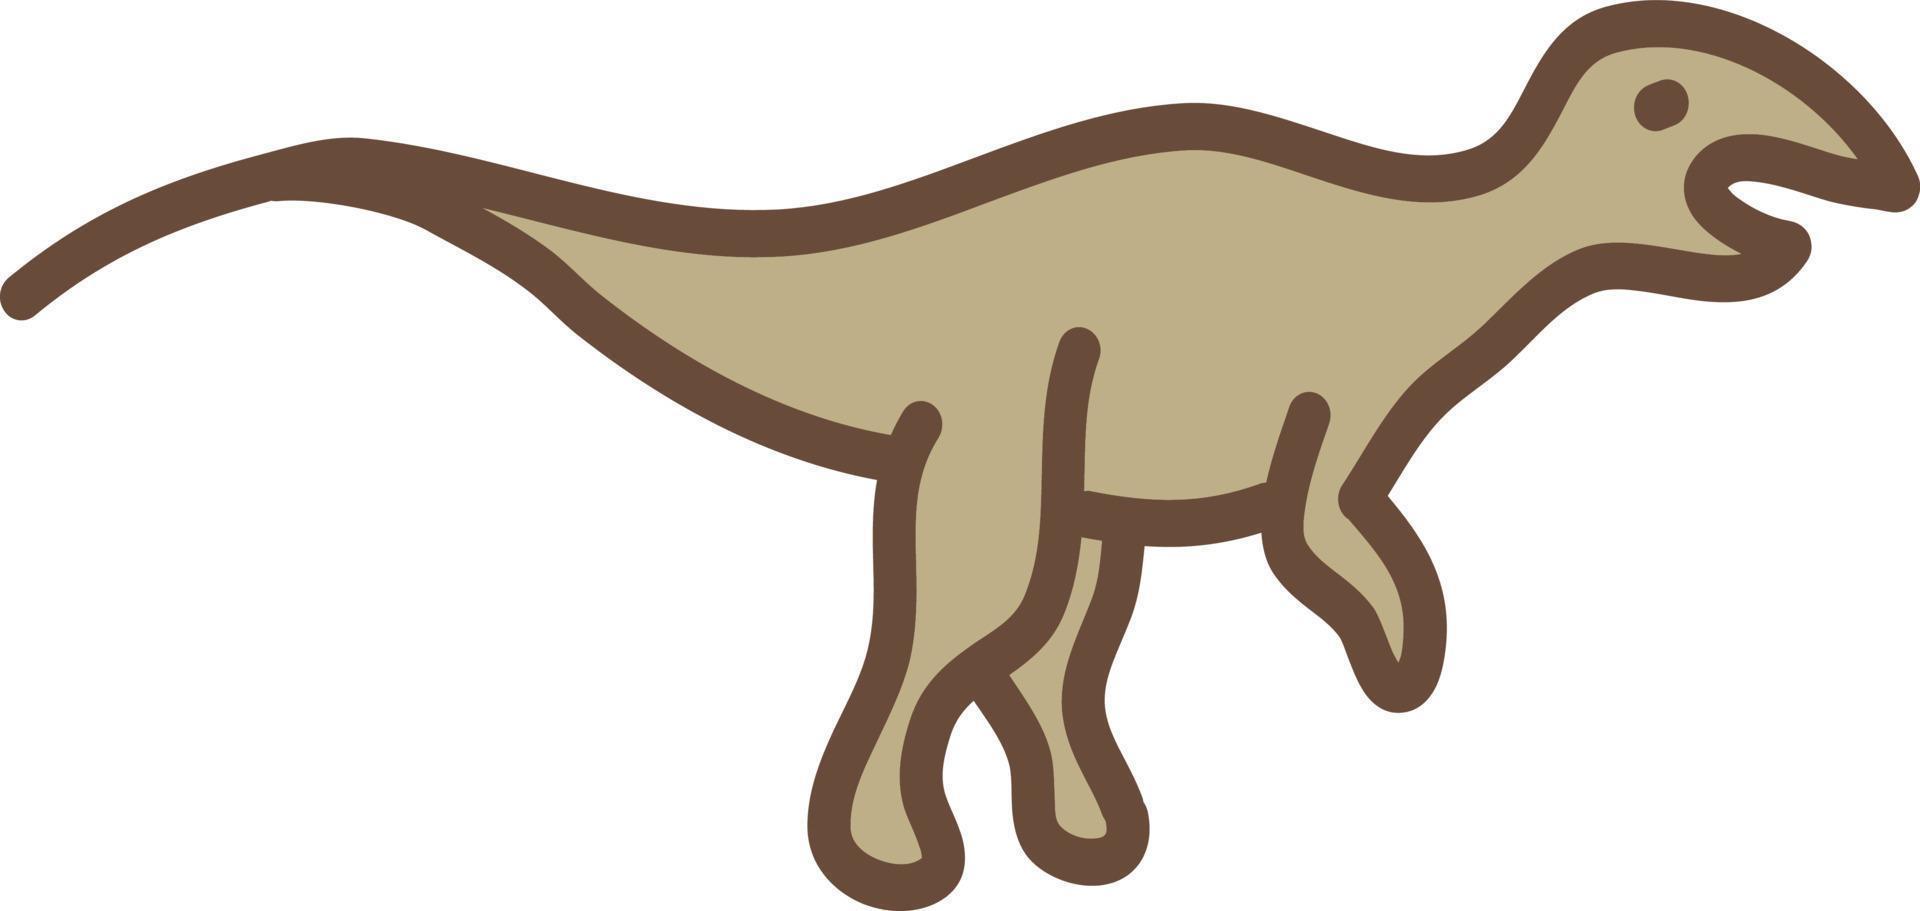 Brown dinosaur, illustration, vector on a white background.